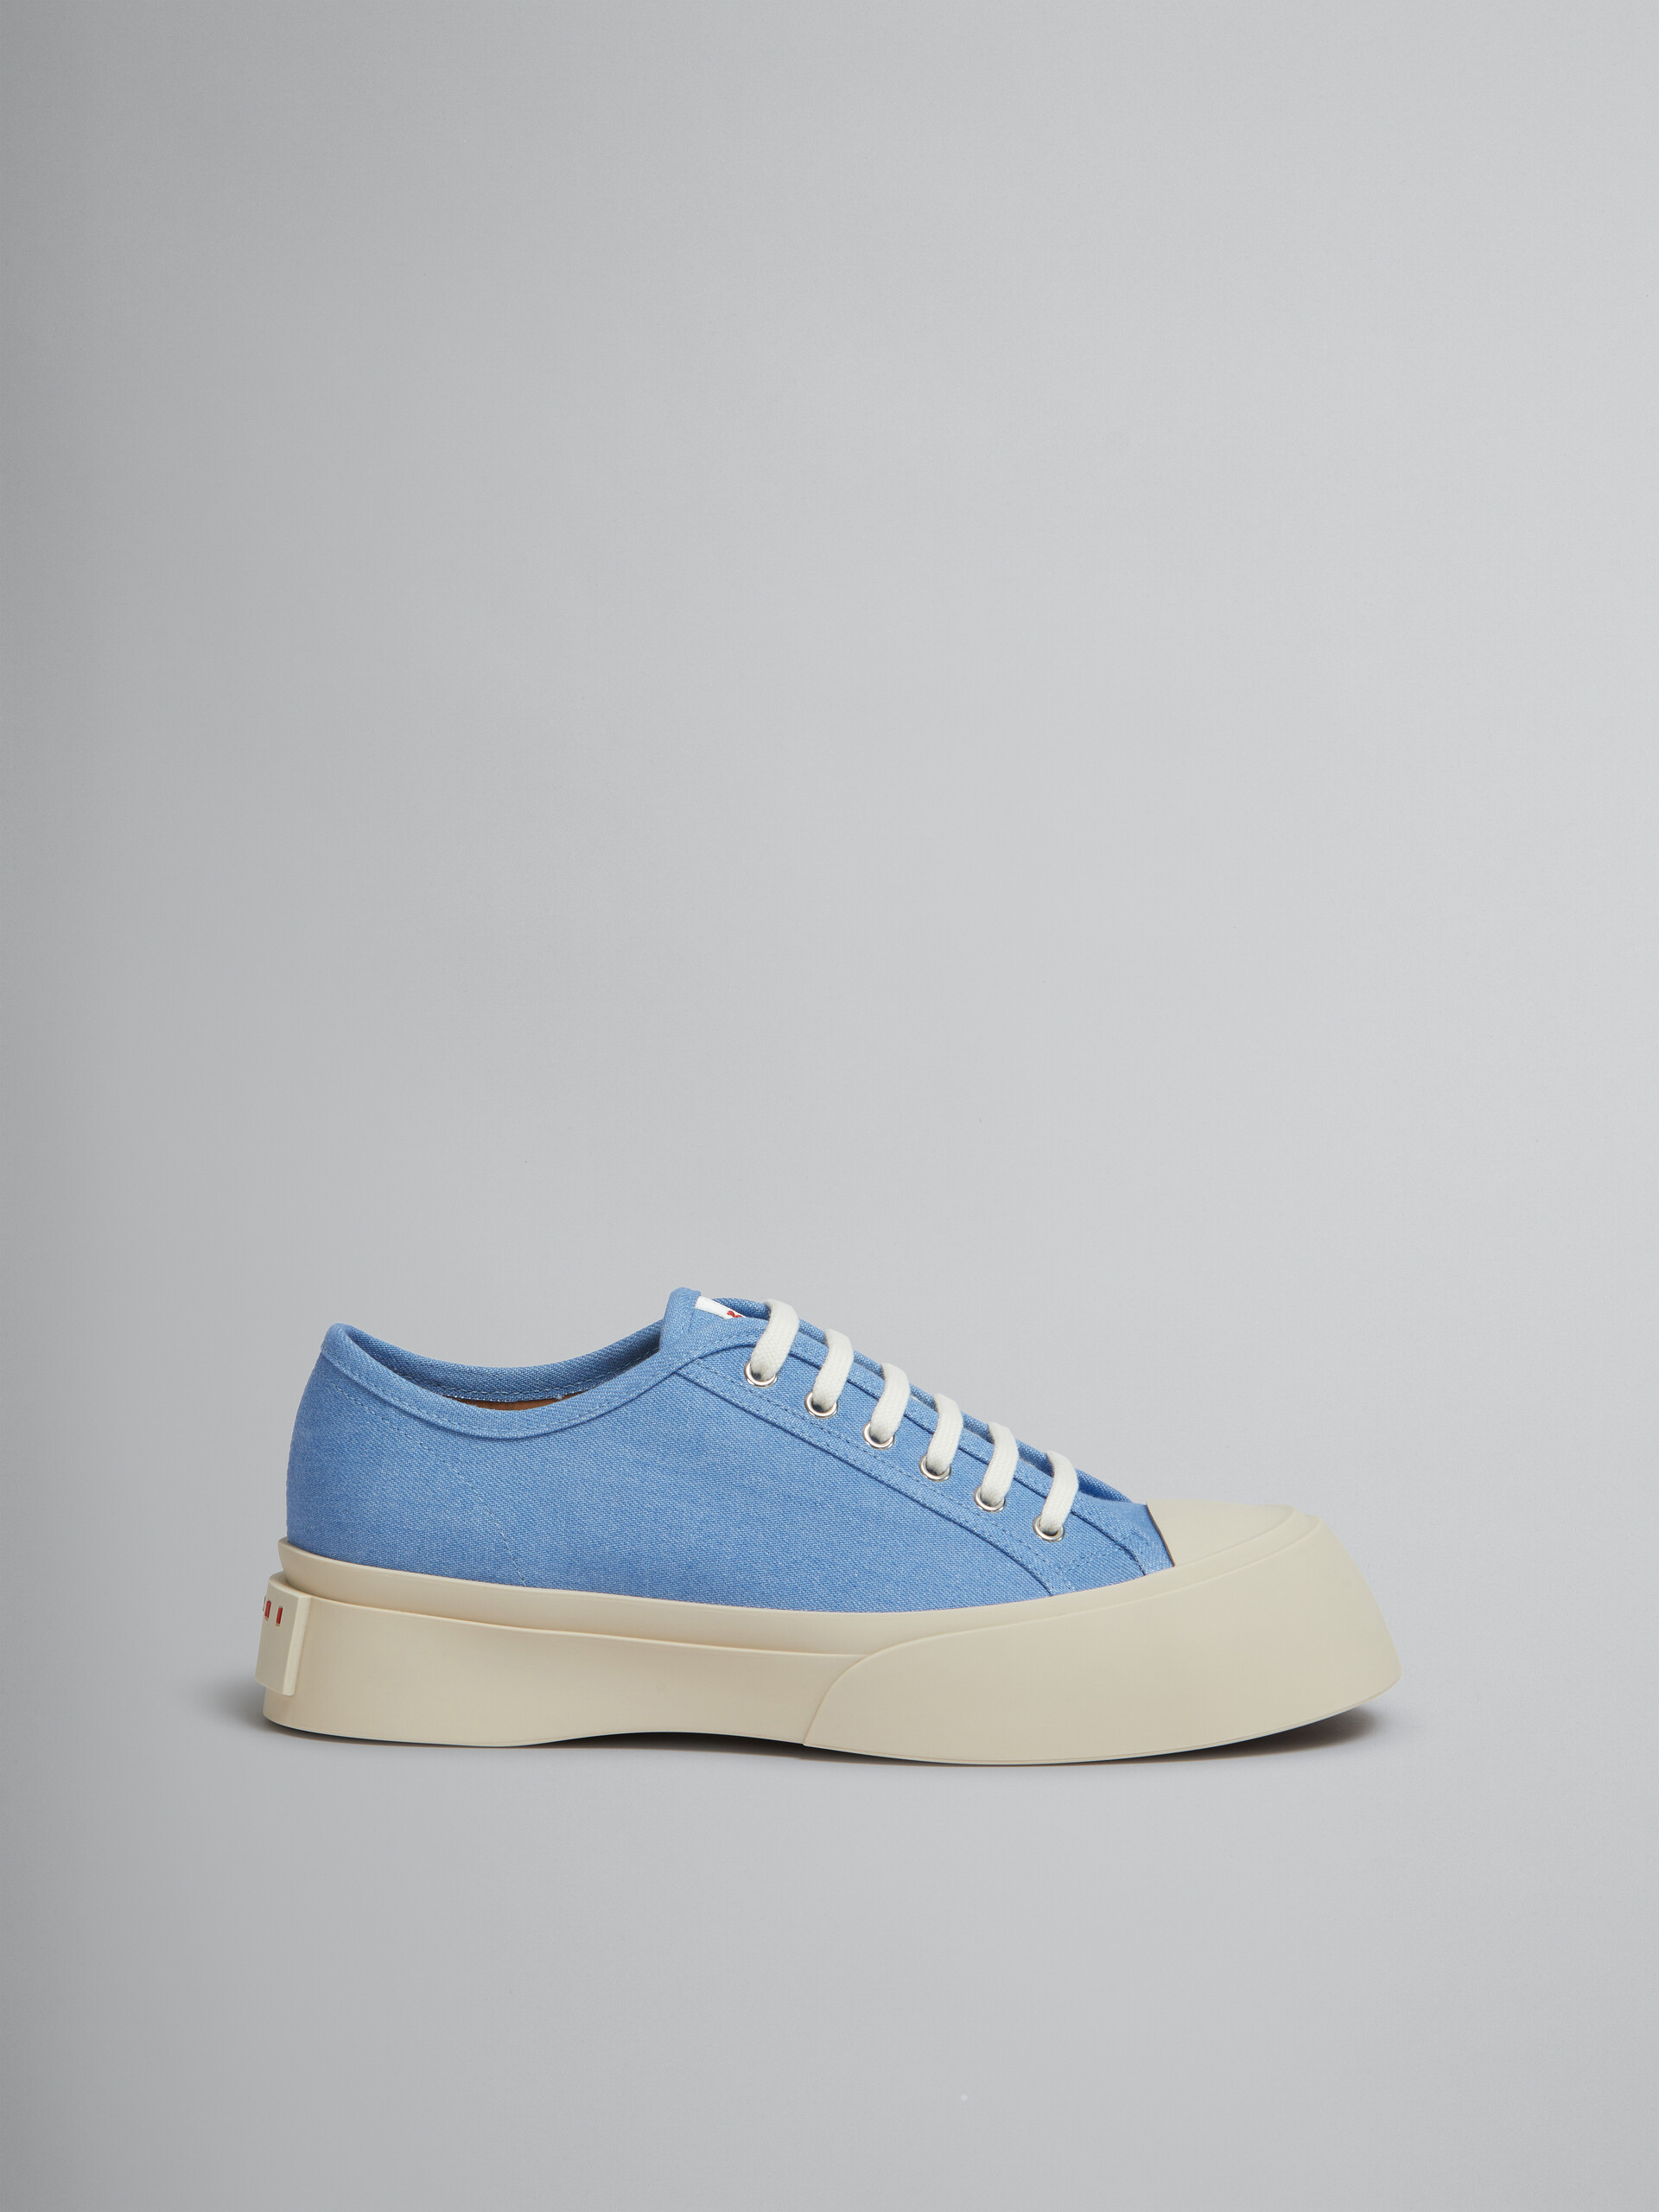 Sneaker Pablo in denim azzurro chiaro - Sneakers - Image 1